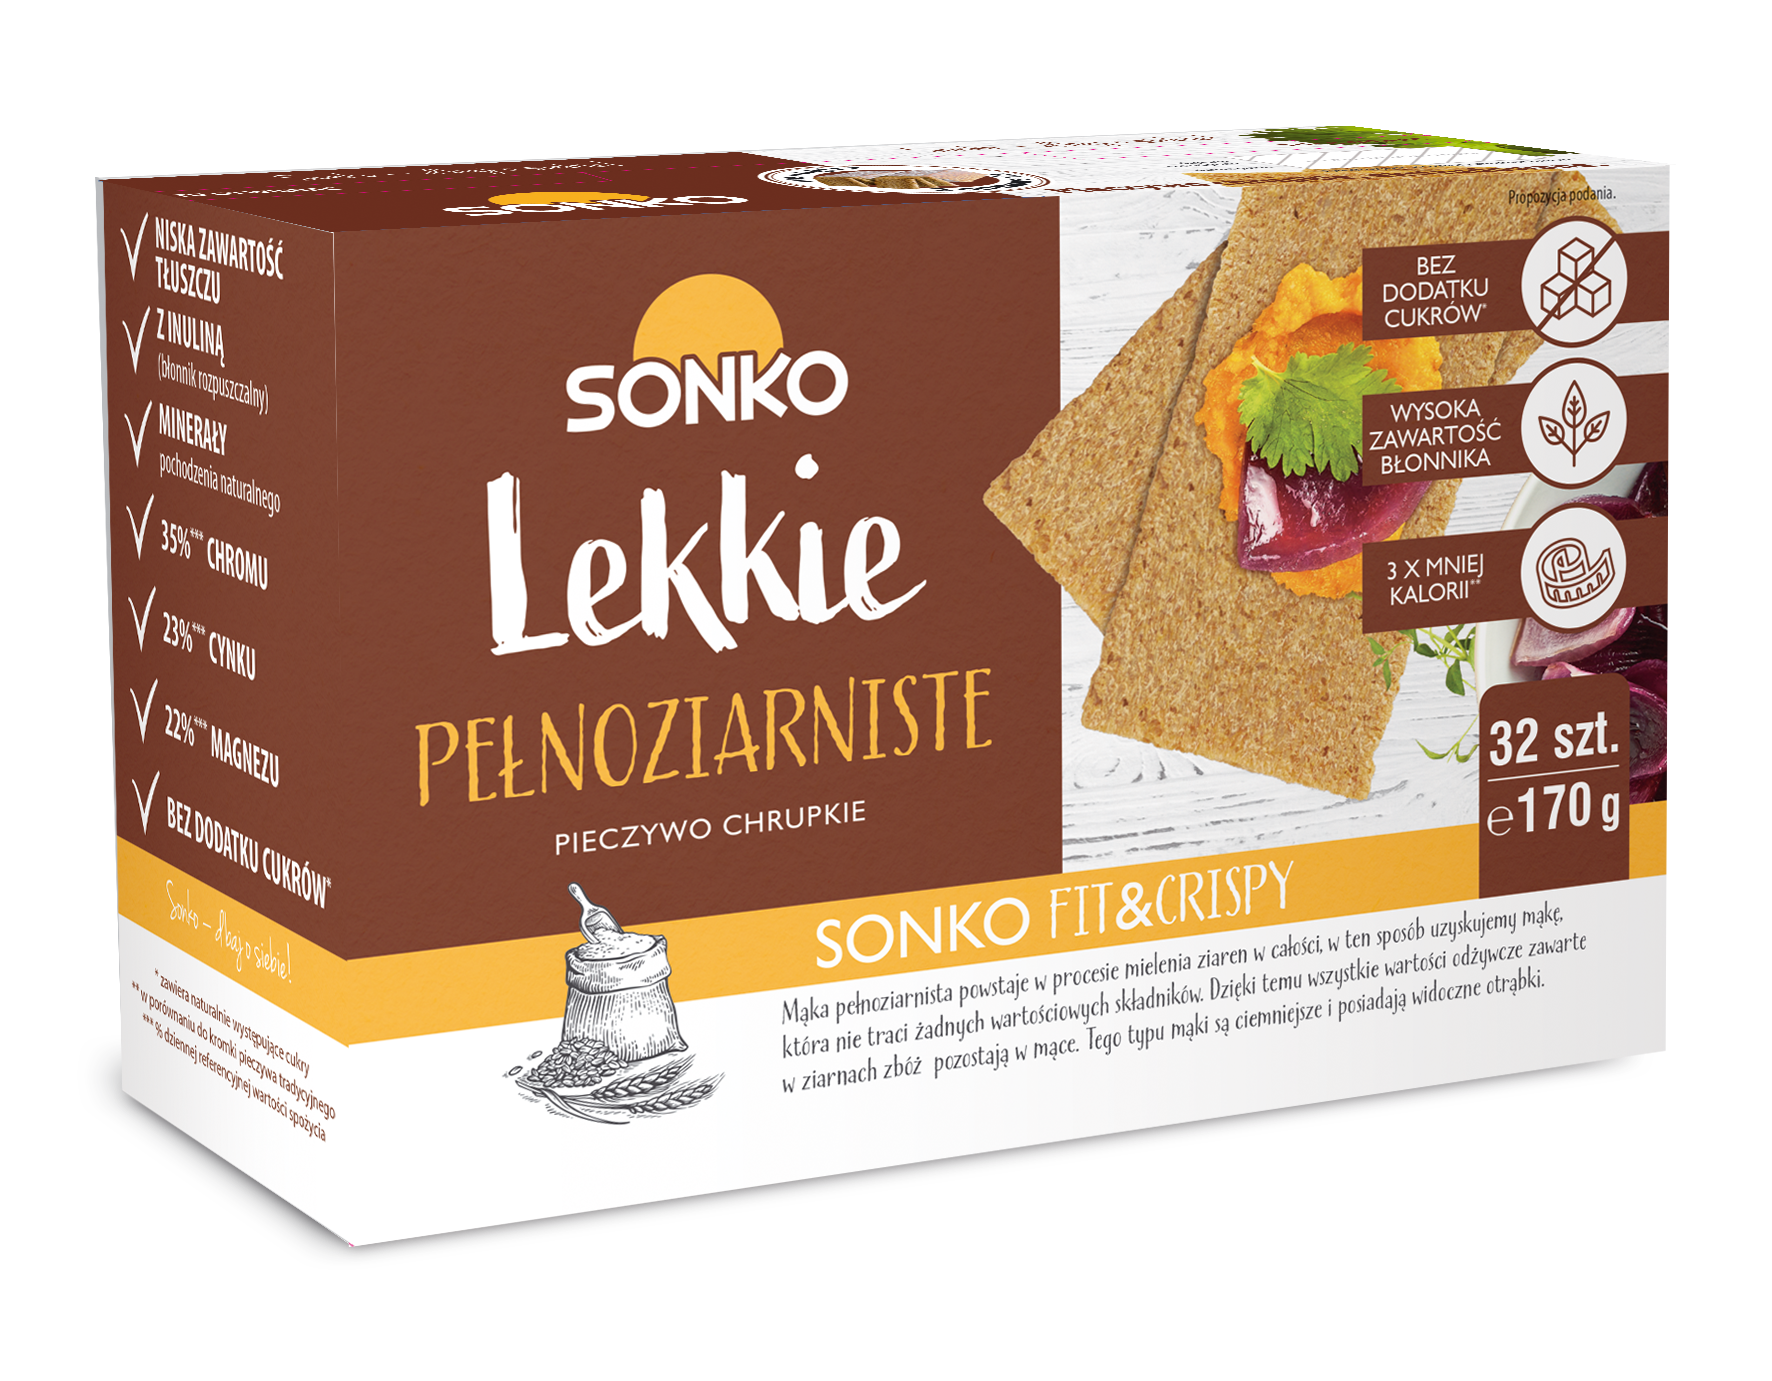 Sonko Whole wheat bread